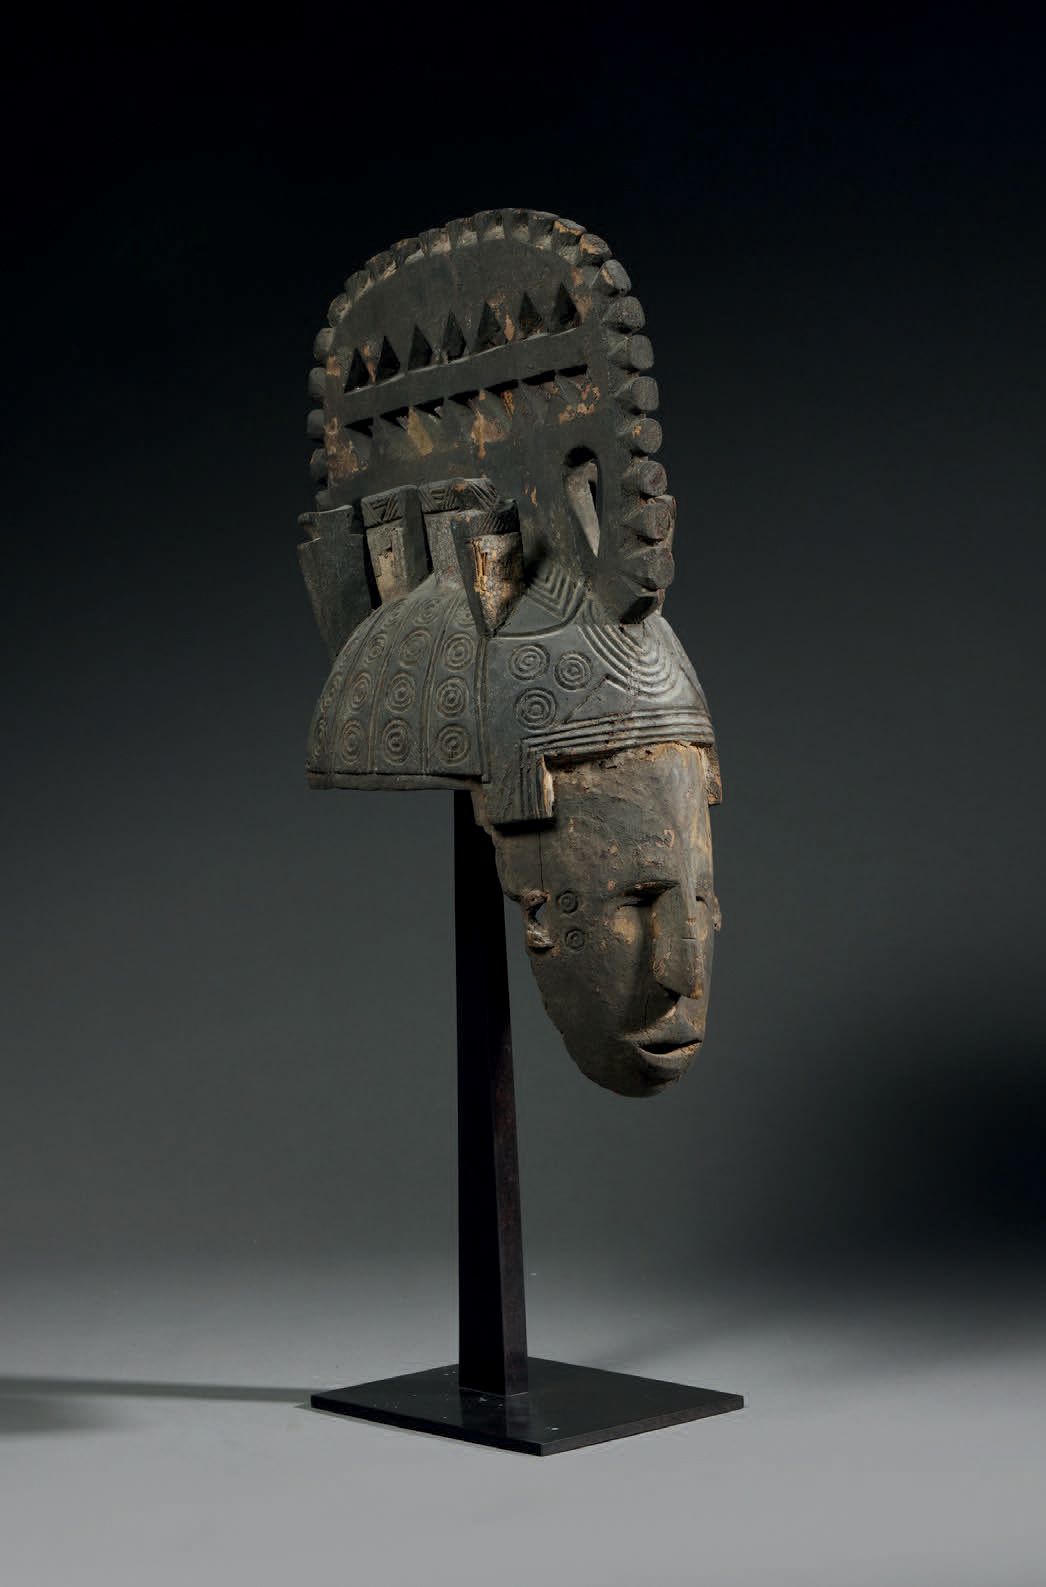 Null Igbo Mmwo mask
Nigeria
Wood
H. 45 cm
Mask-healm depicting a human face topp&hellip;